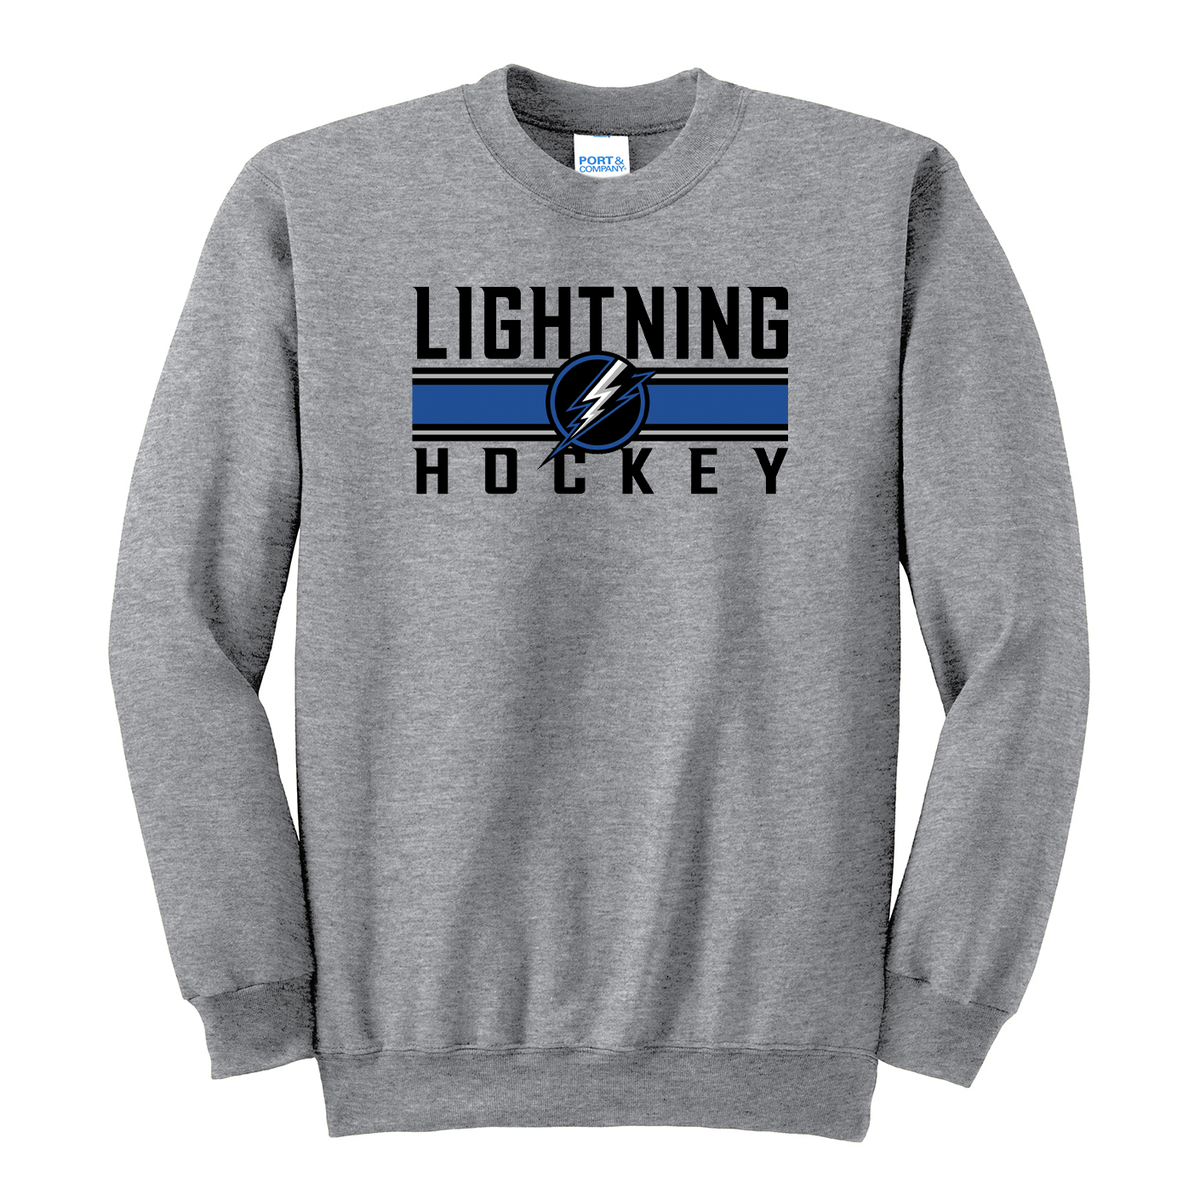 Long Island Lightning Hockey  Crew Neck Sweater